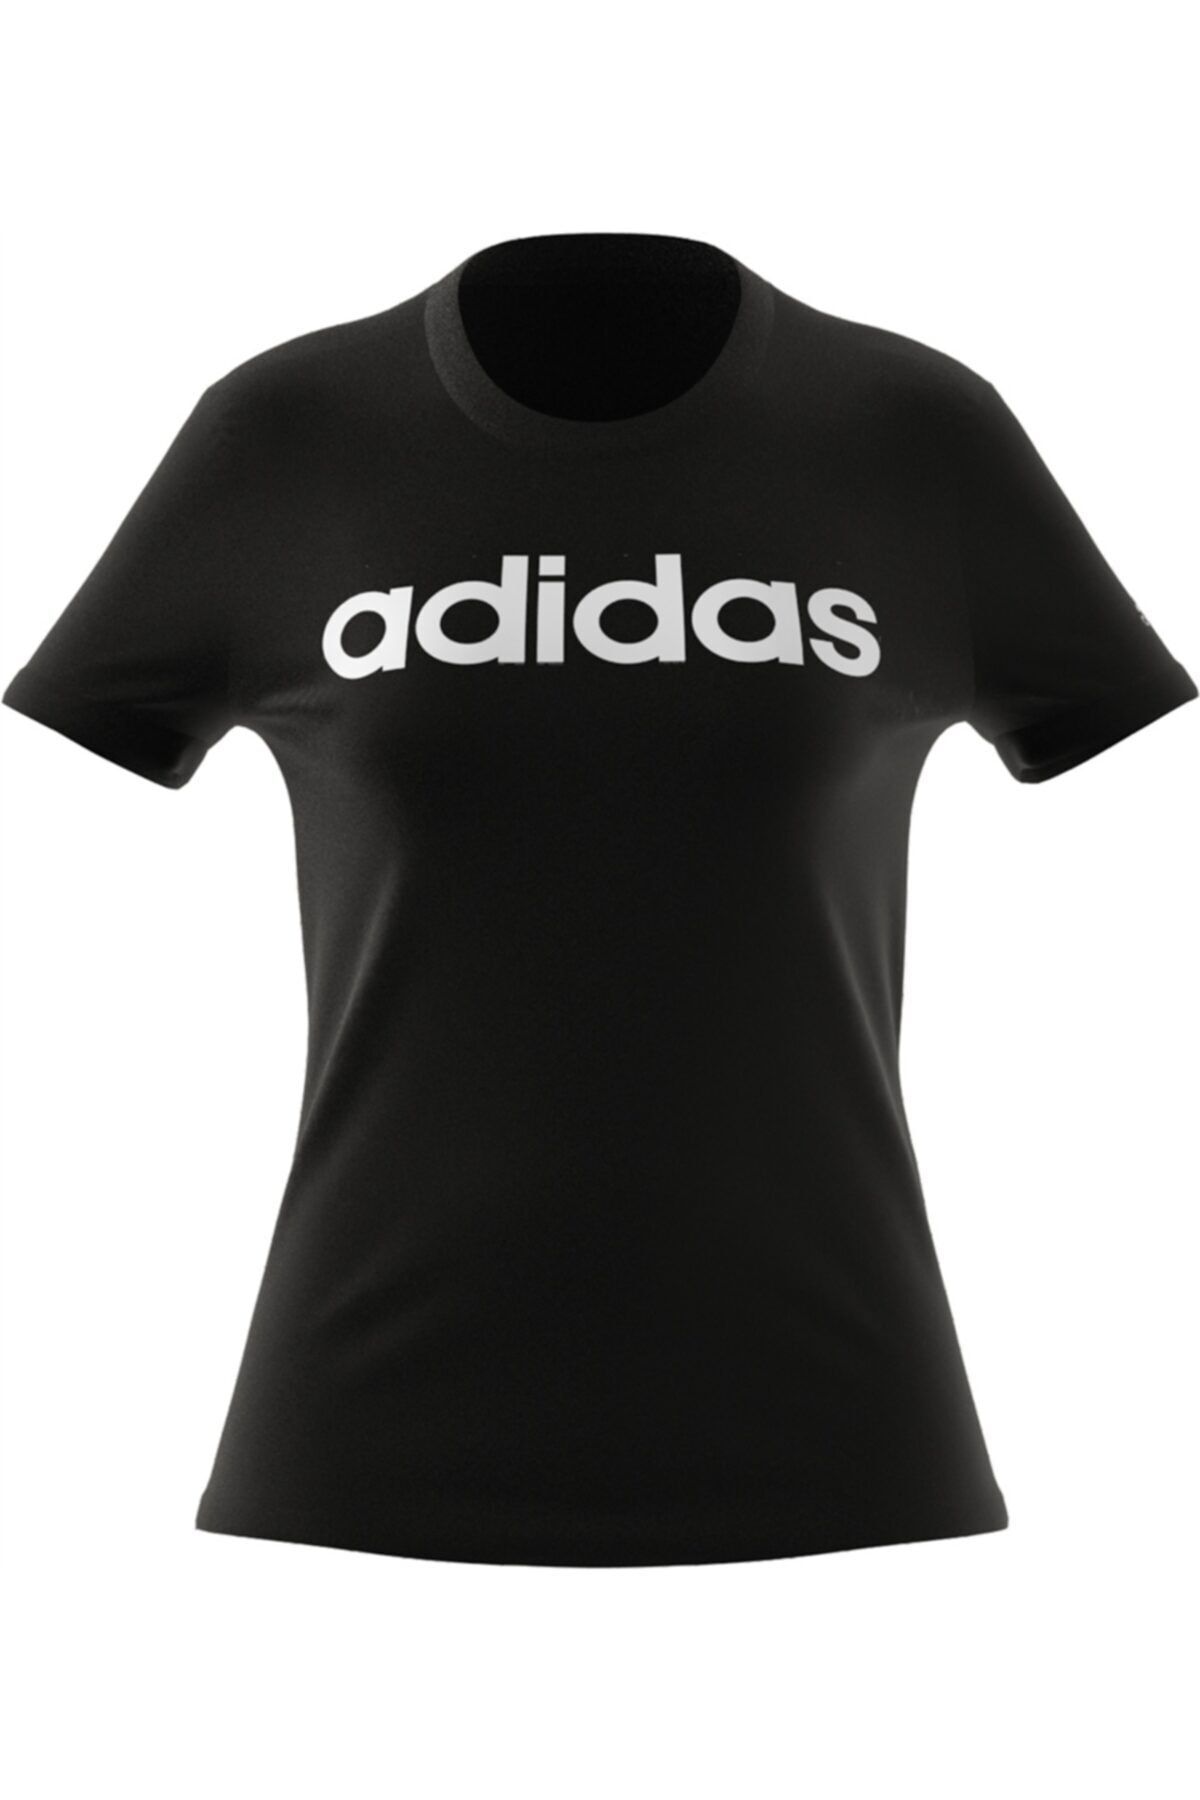 adidas T-shirt Kadın T-shirt Black/whıte Gl0769